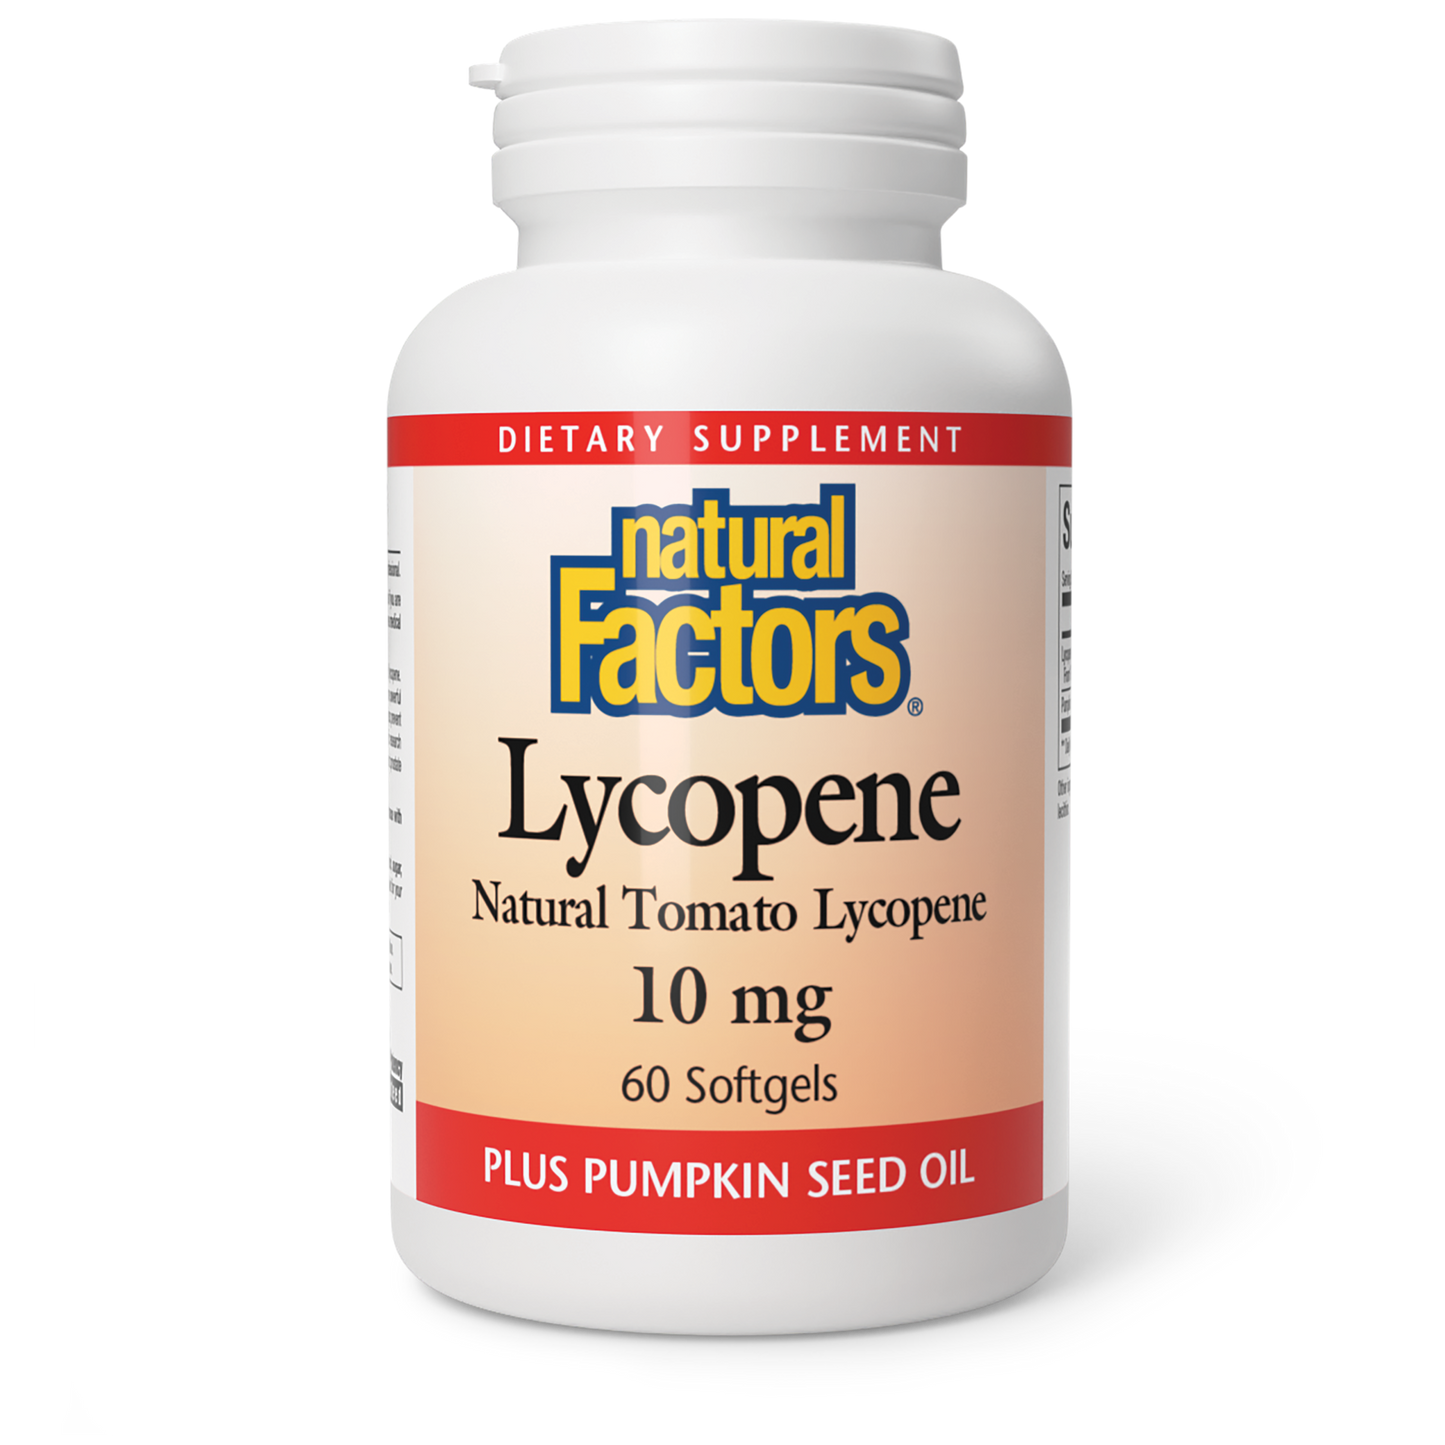 Lycopene|variant|hi-res|1016U